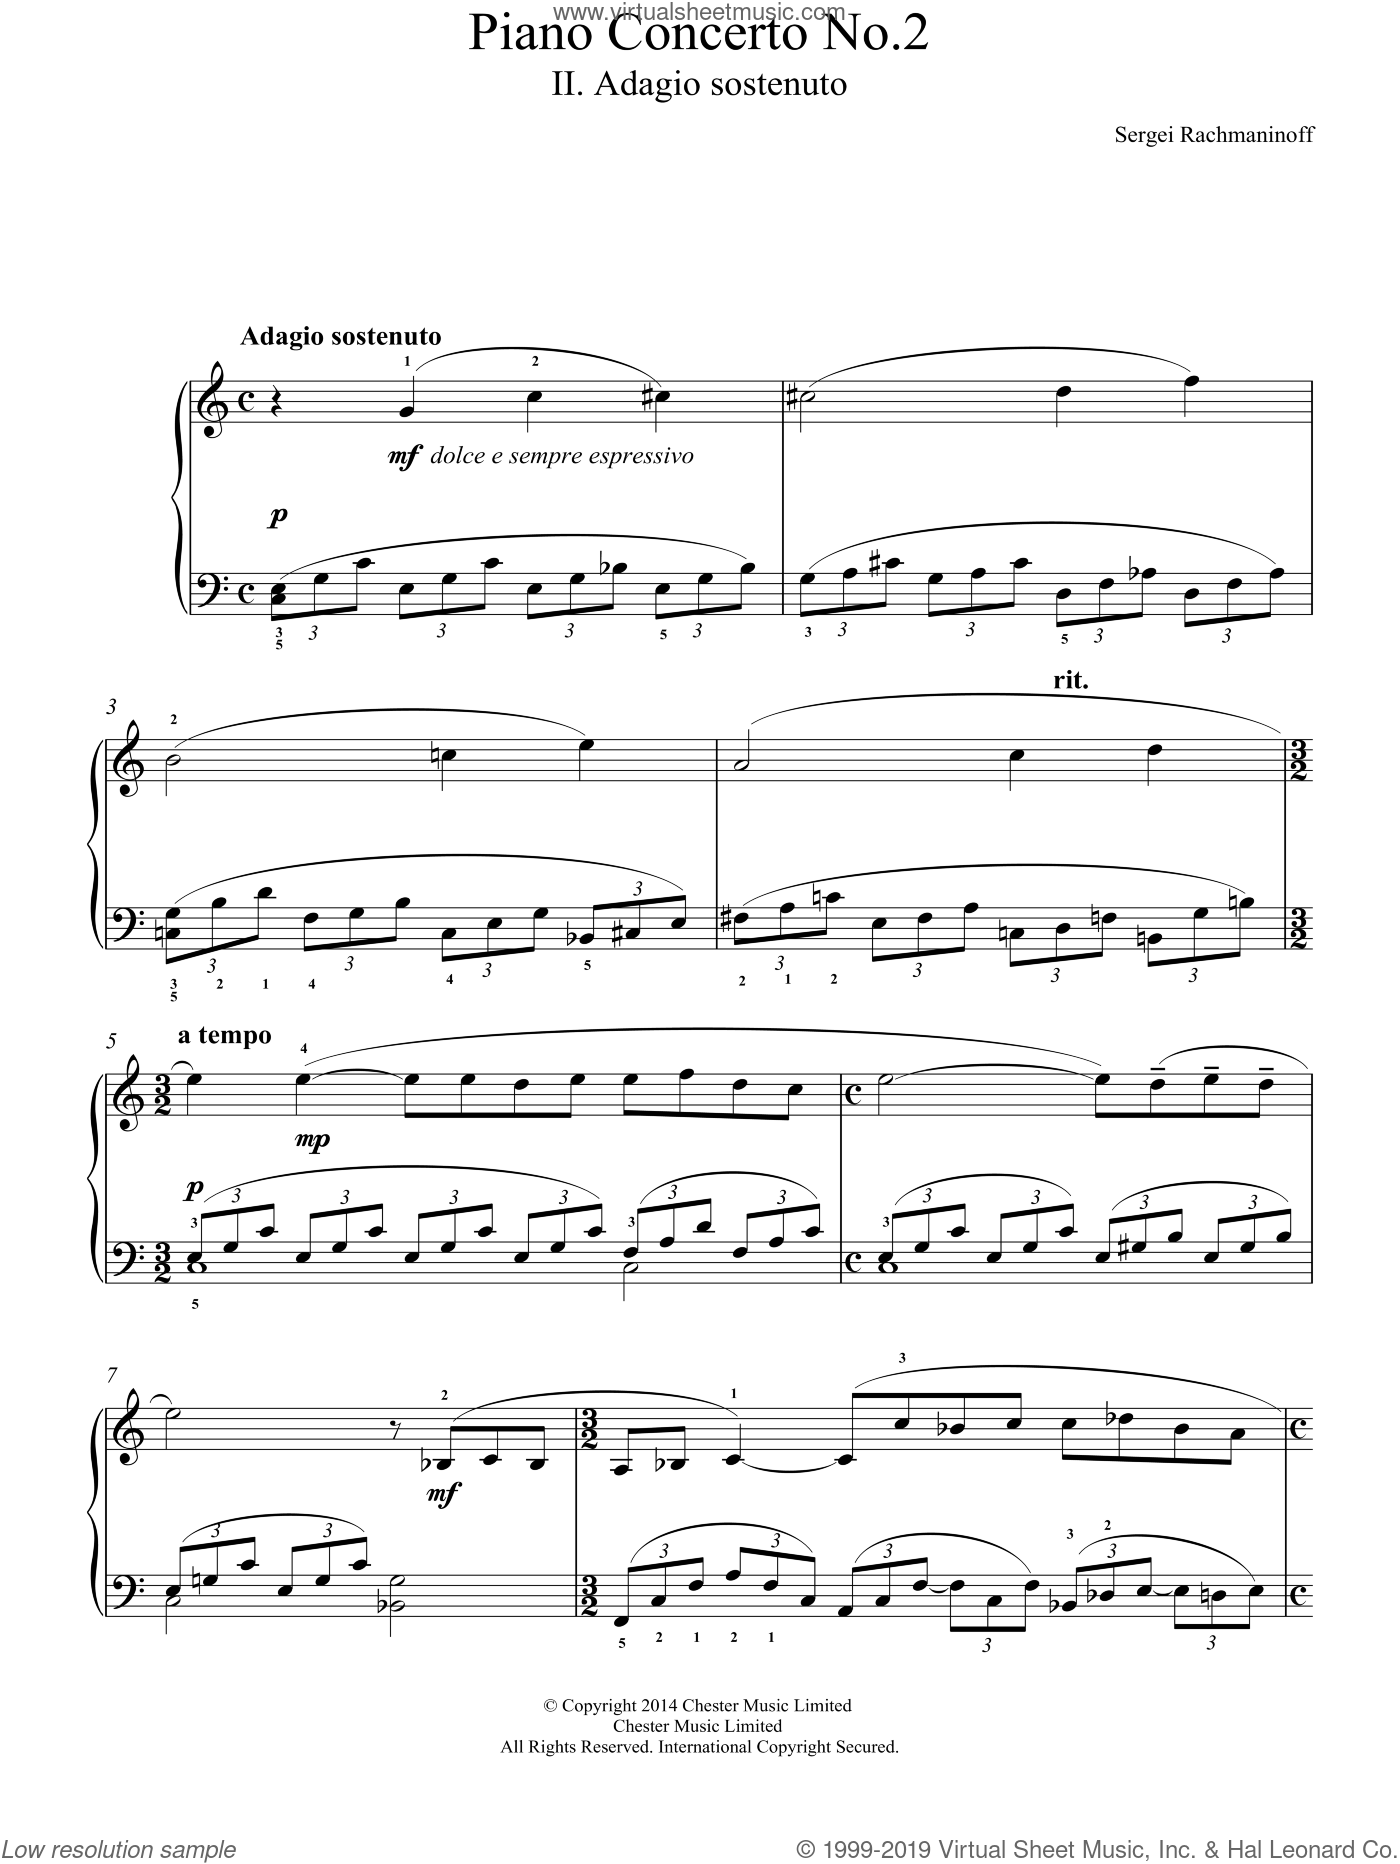 - Piano Concerto No.2 - 2nd Movement sheet (easy) for piano solo